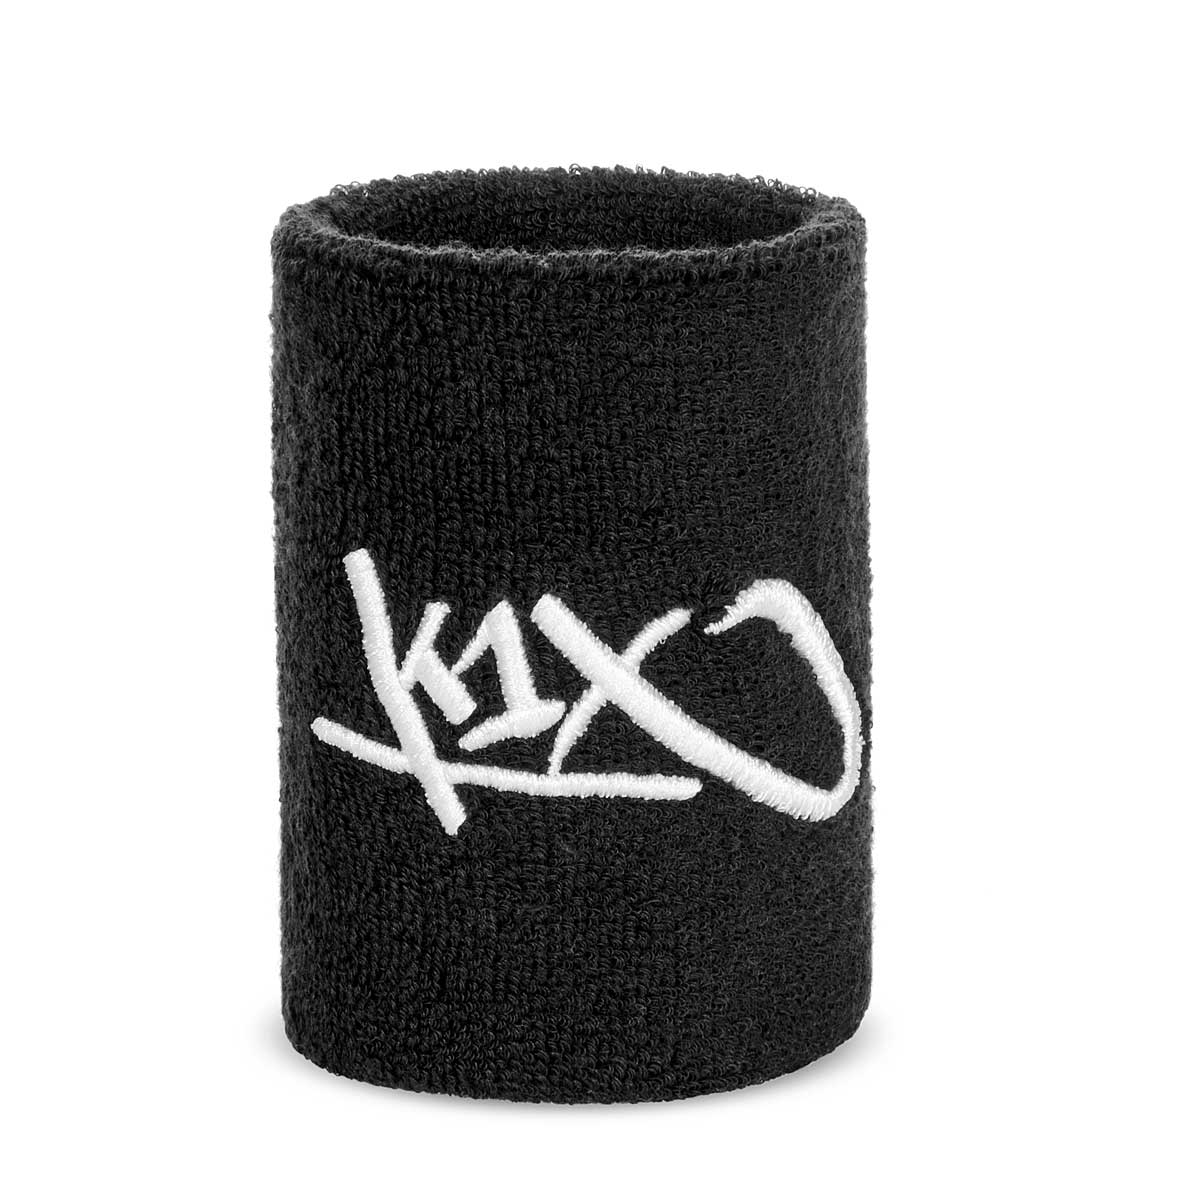 K1X Hardwood Wristbands, Black